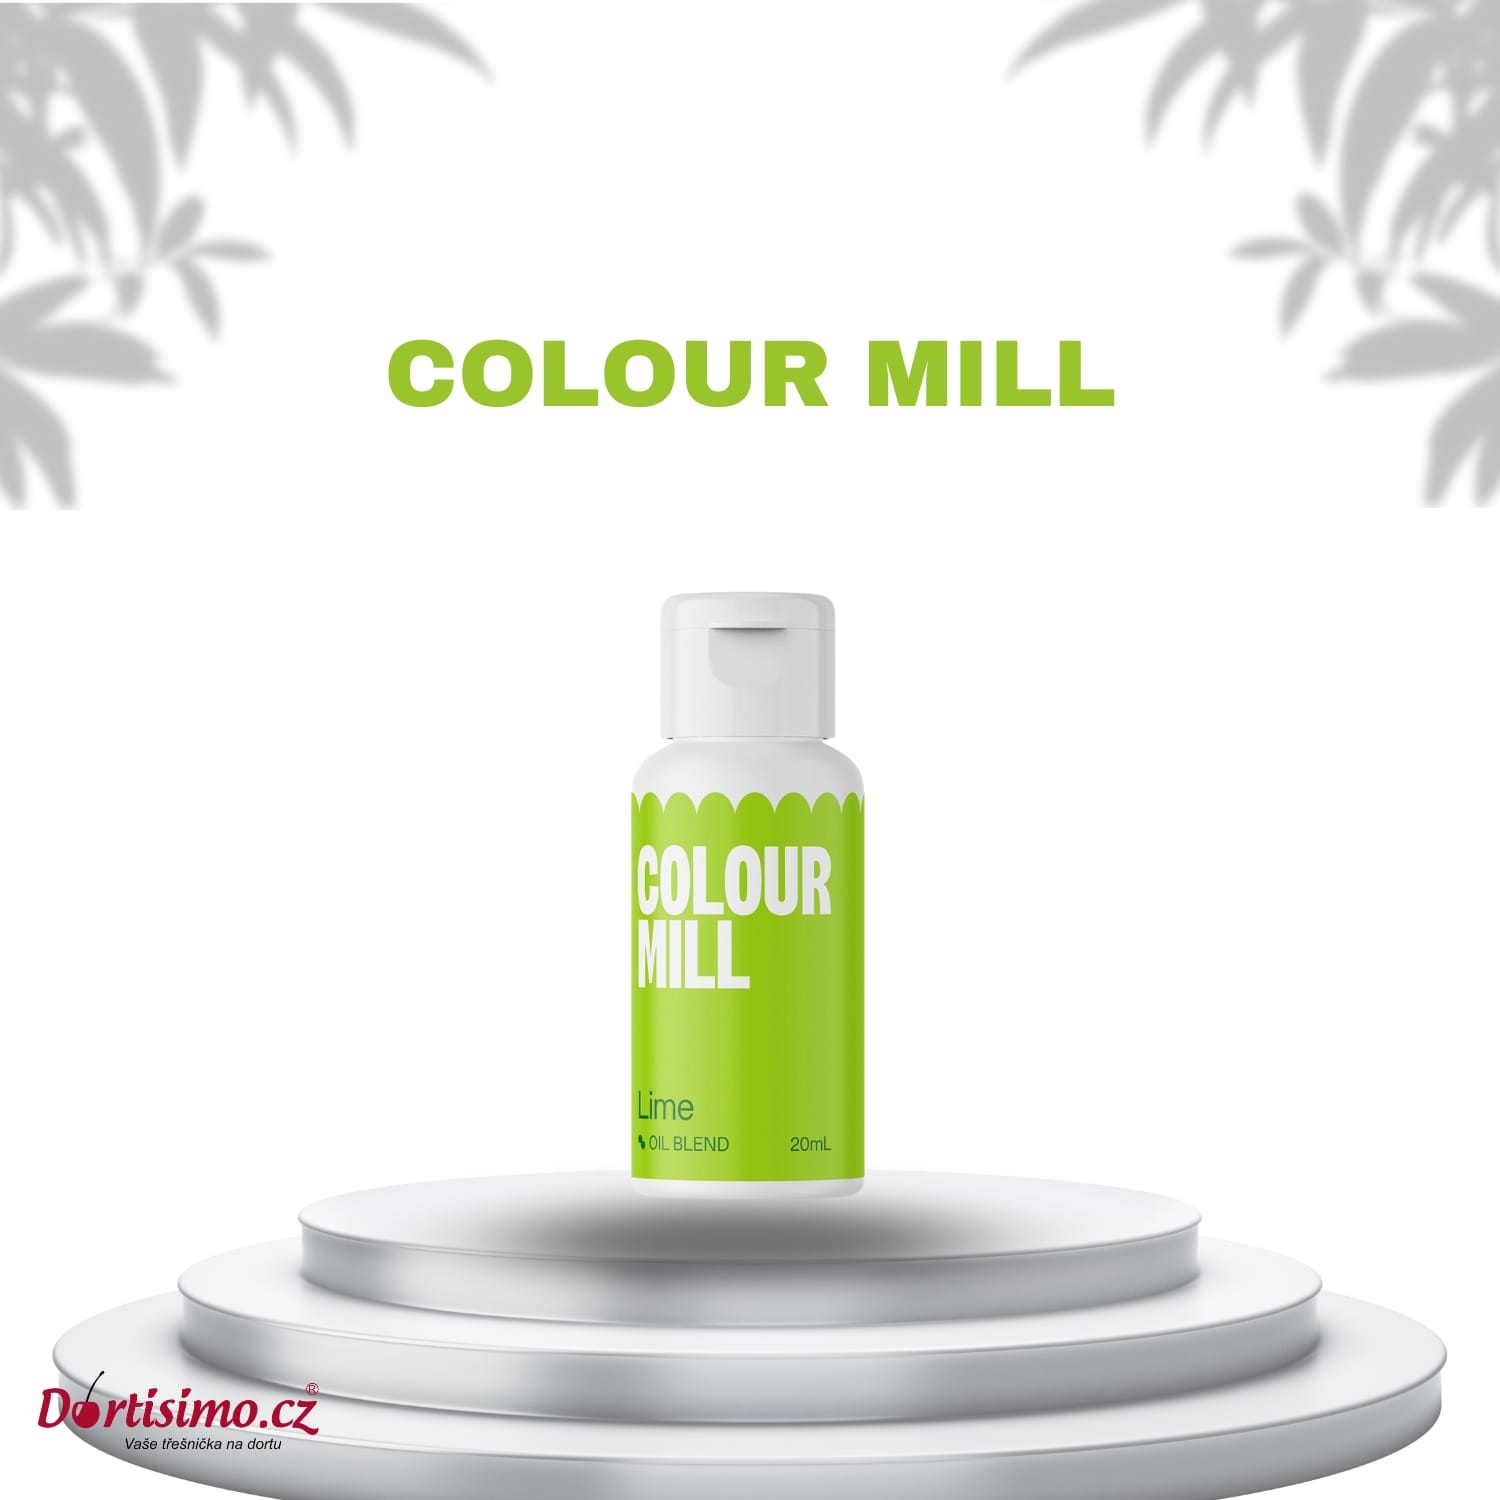 Obrázek k výrobku 23696 - Colour Mill olejová farba Lime (20ml)